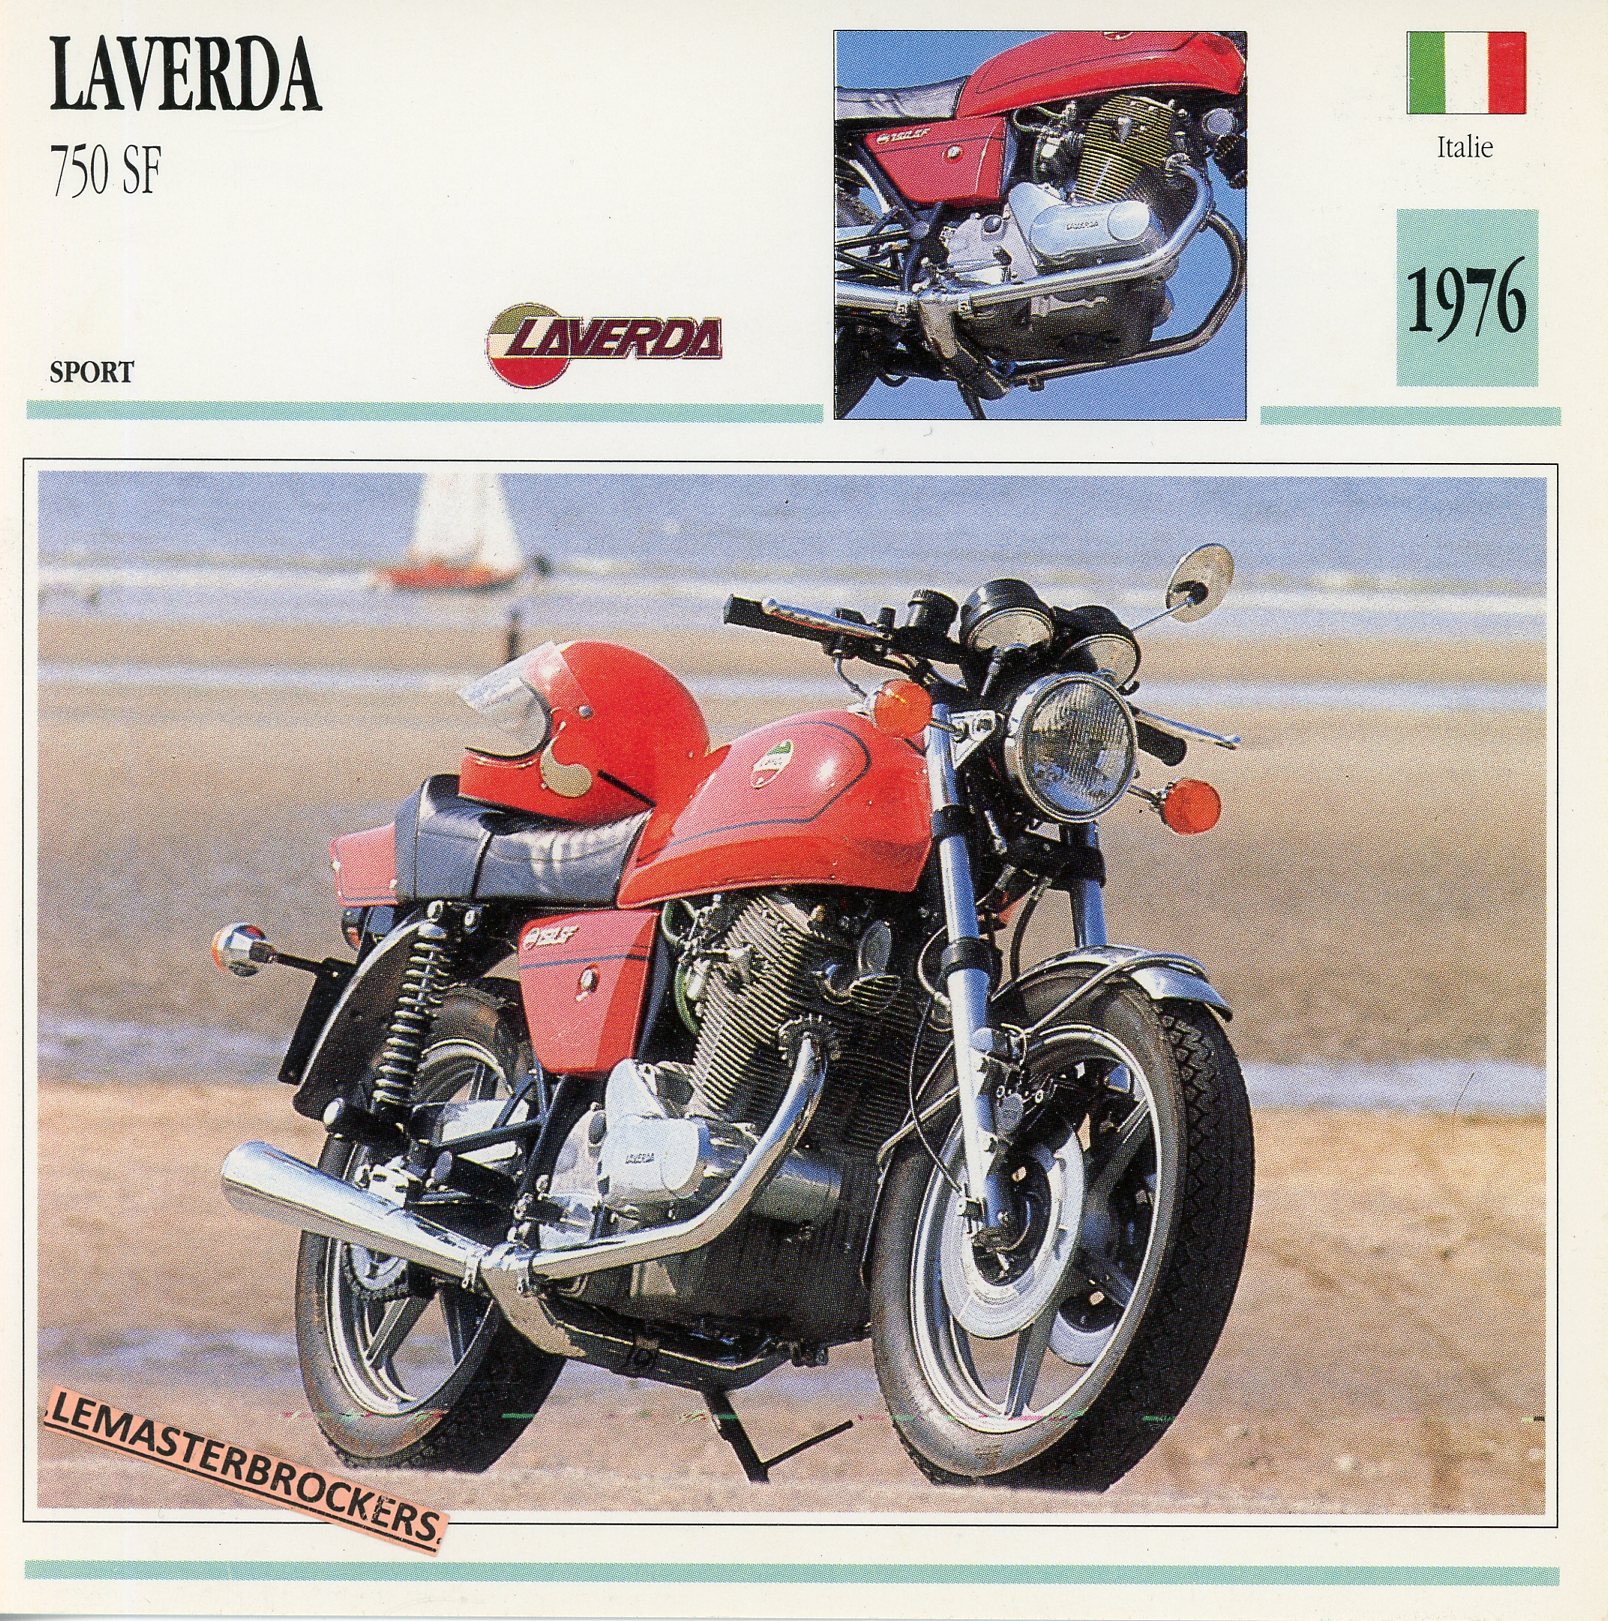 LAVERDA-750-SF-750SF-1976-LEMASTERBROCKERS-FICHE-MOTO-ATLAS-CARD